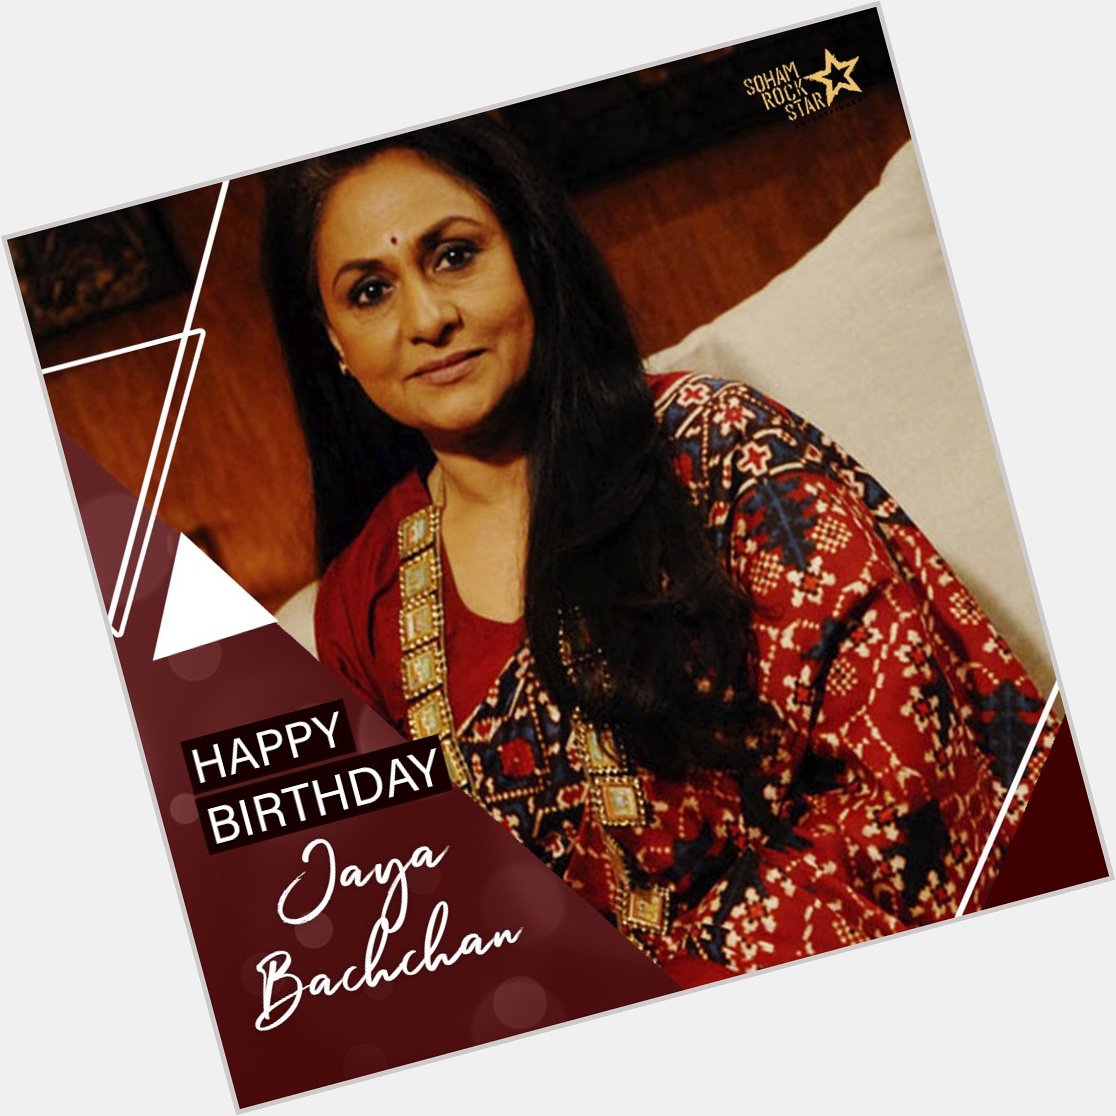 Wishing Jaya Bachchan  a very Happy Birthday. 